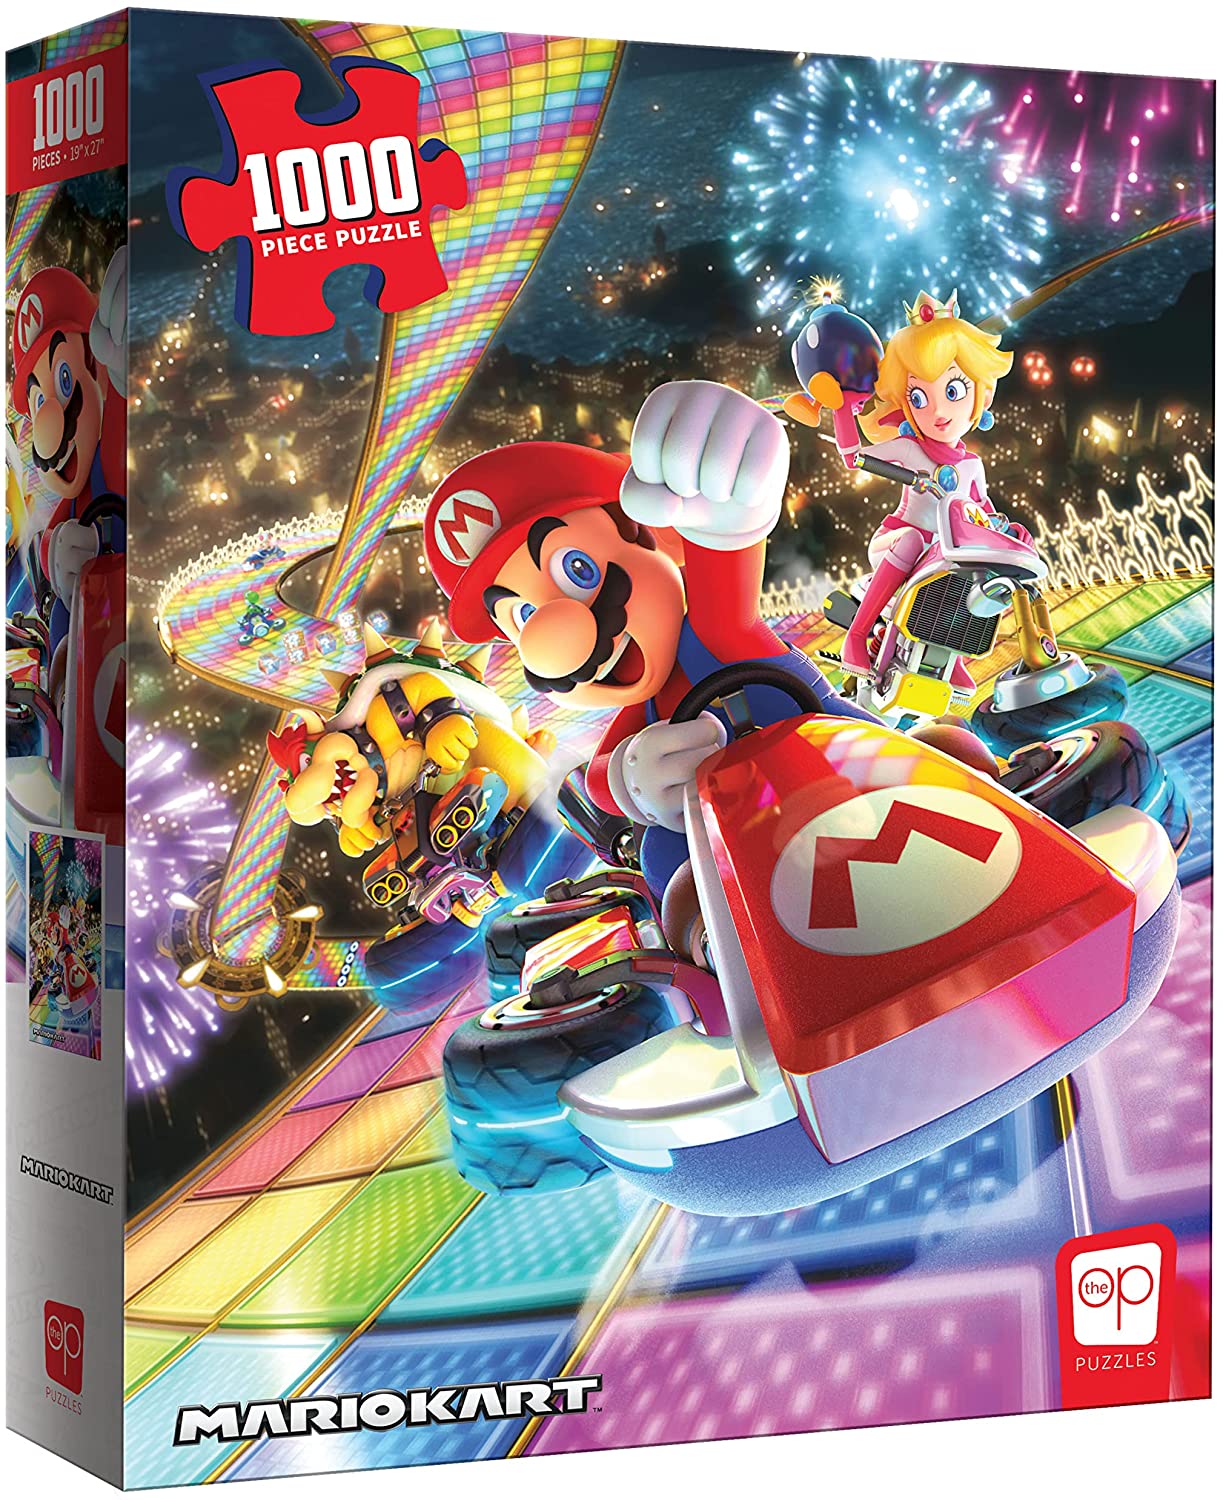 Mario Kart - Rainbow Road: 1000 Piece Jigsaw Puzzle